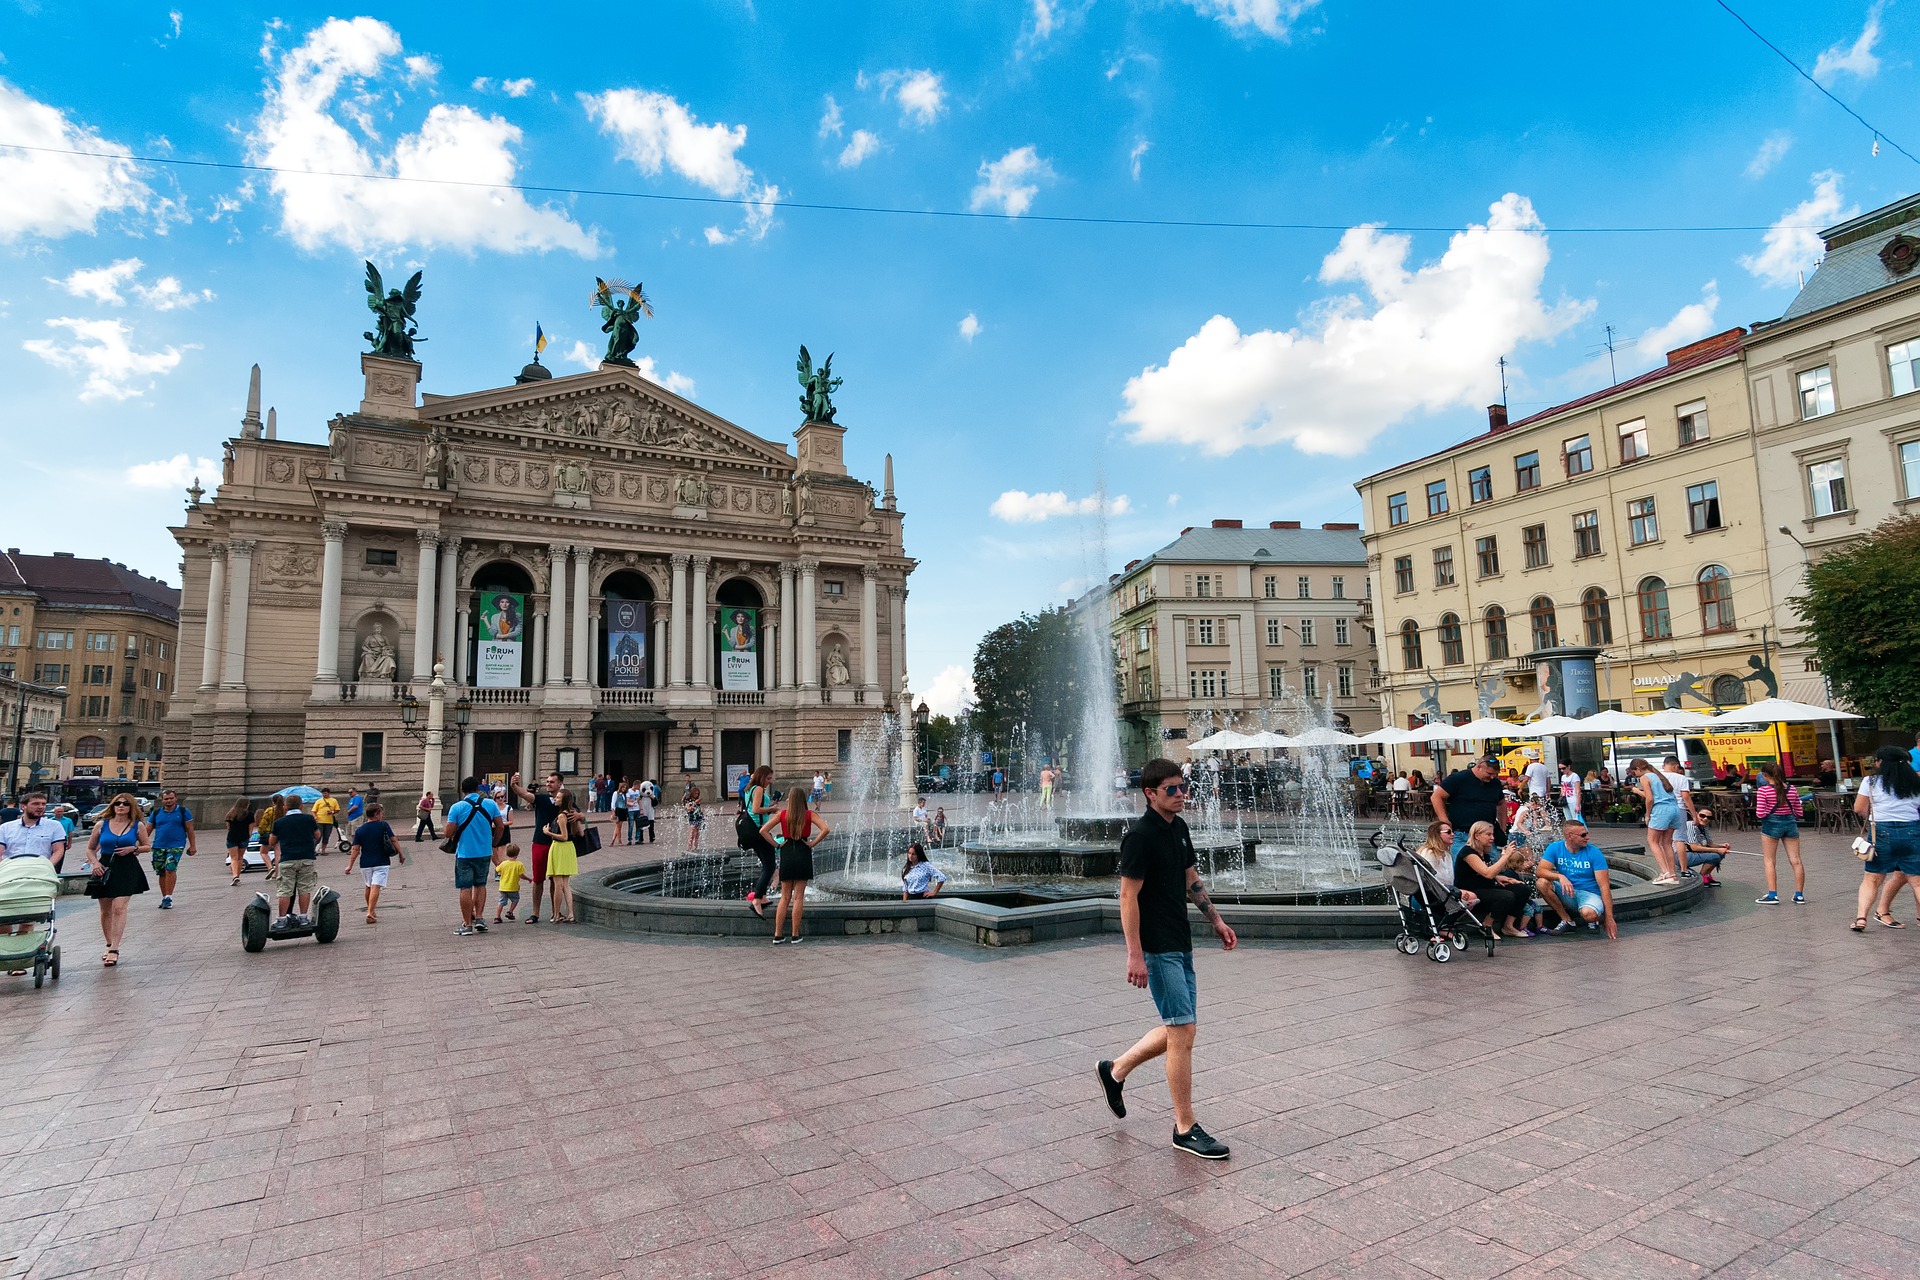 The historical center of Lviv